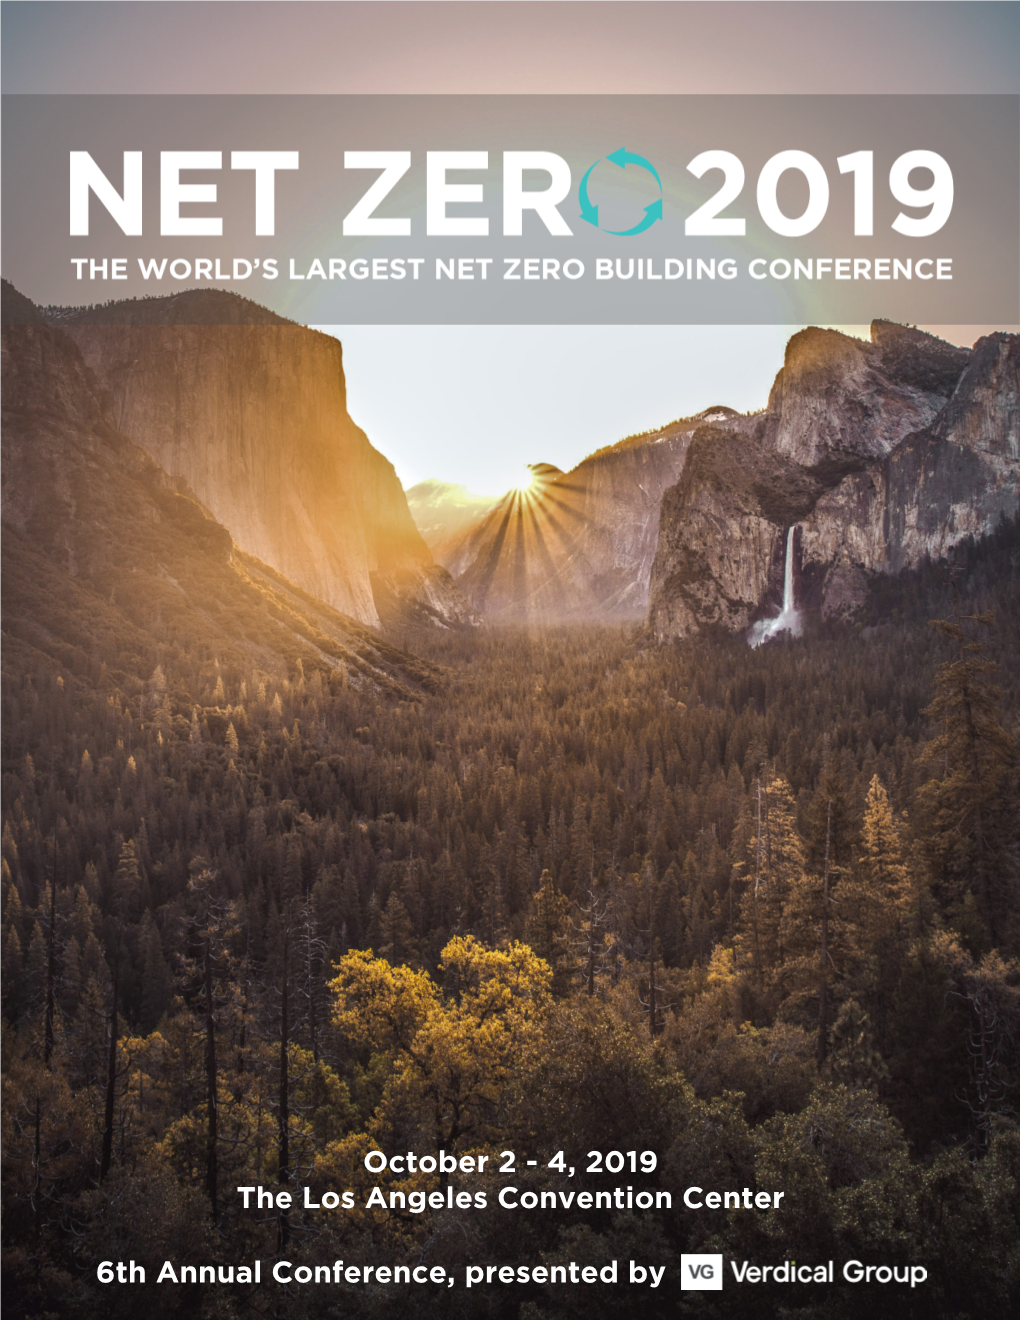 Net Zer 2019 the World's Largest Net Zero Building